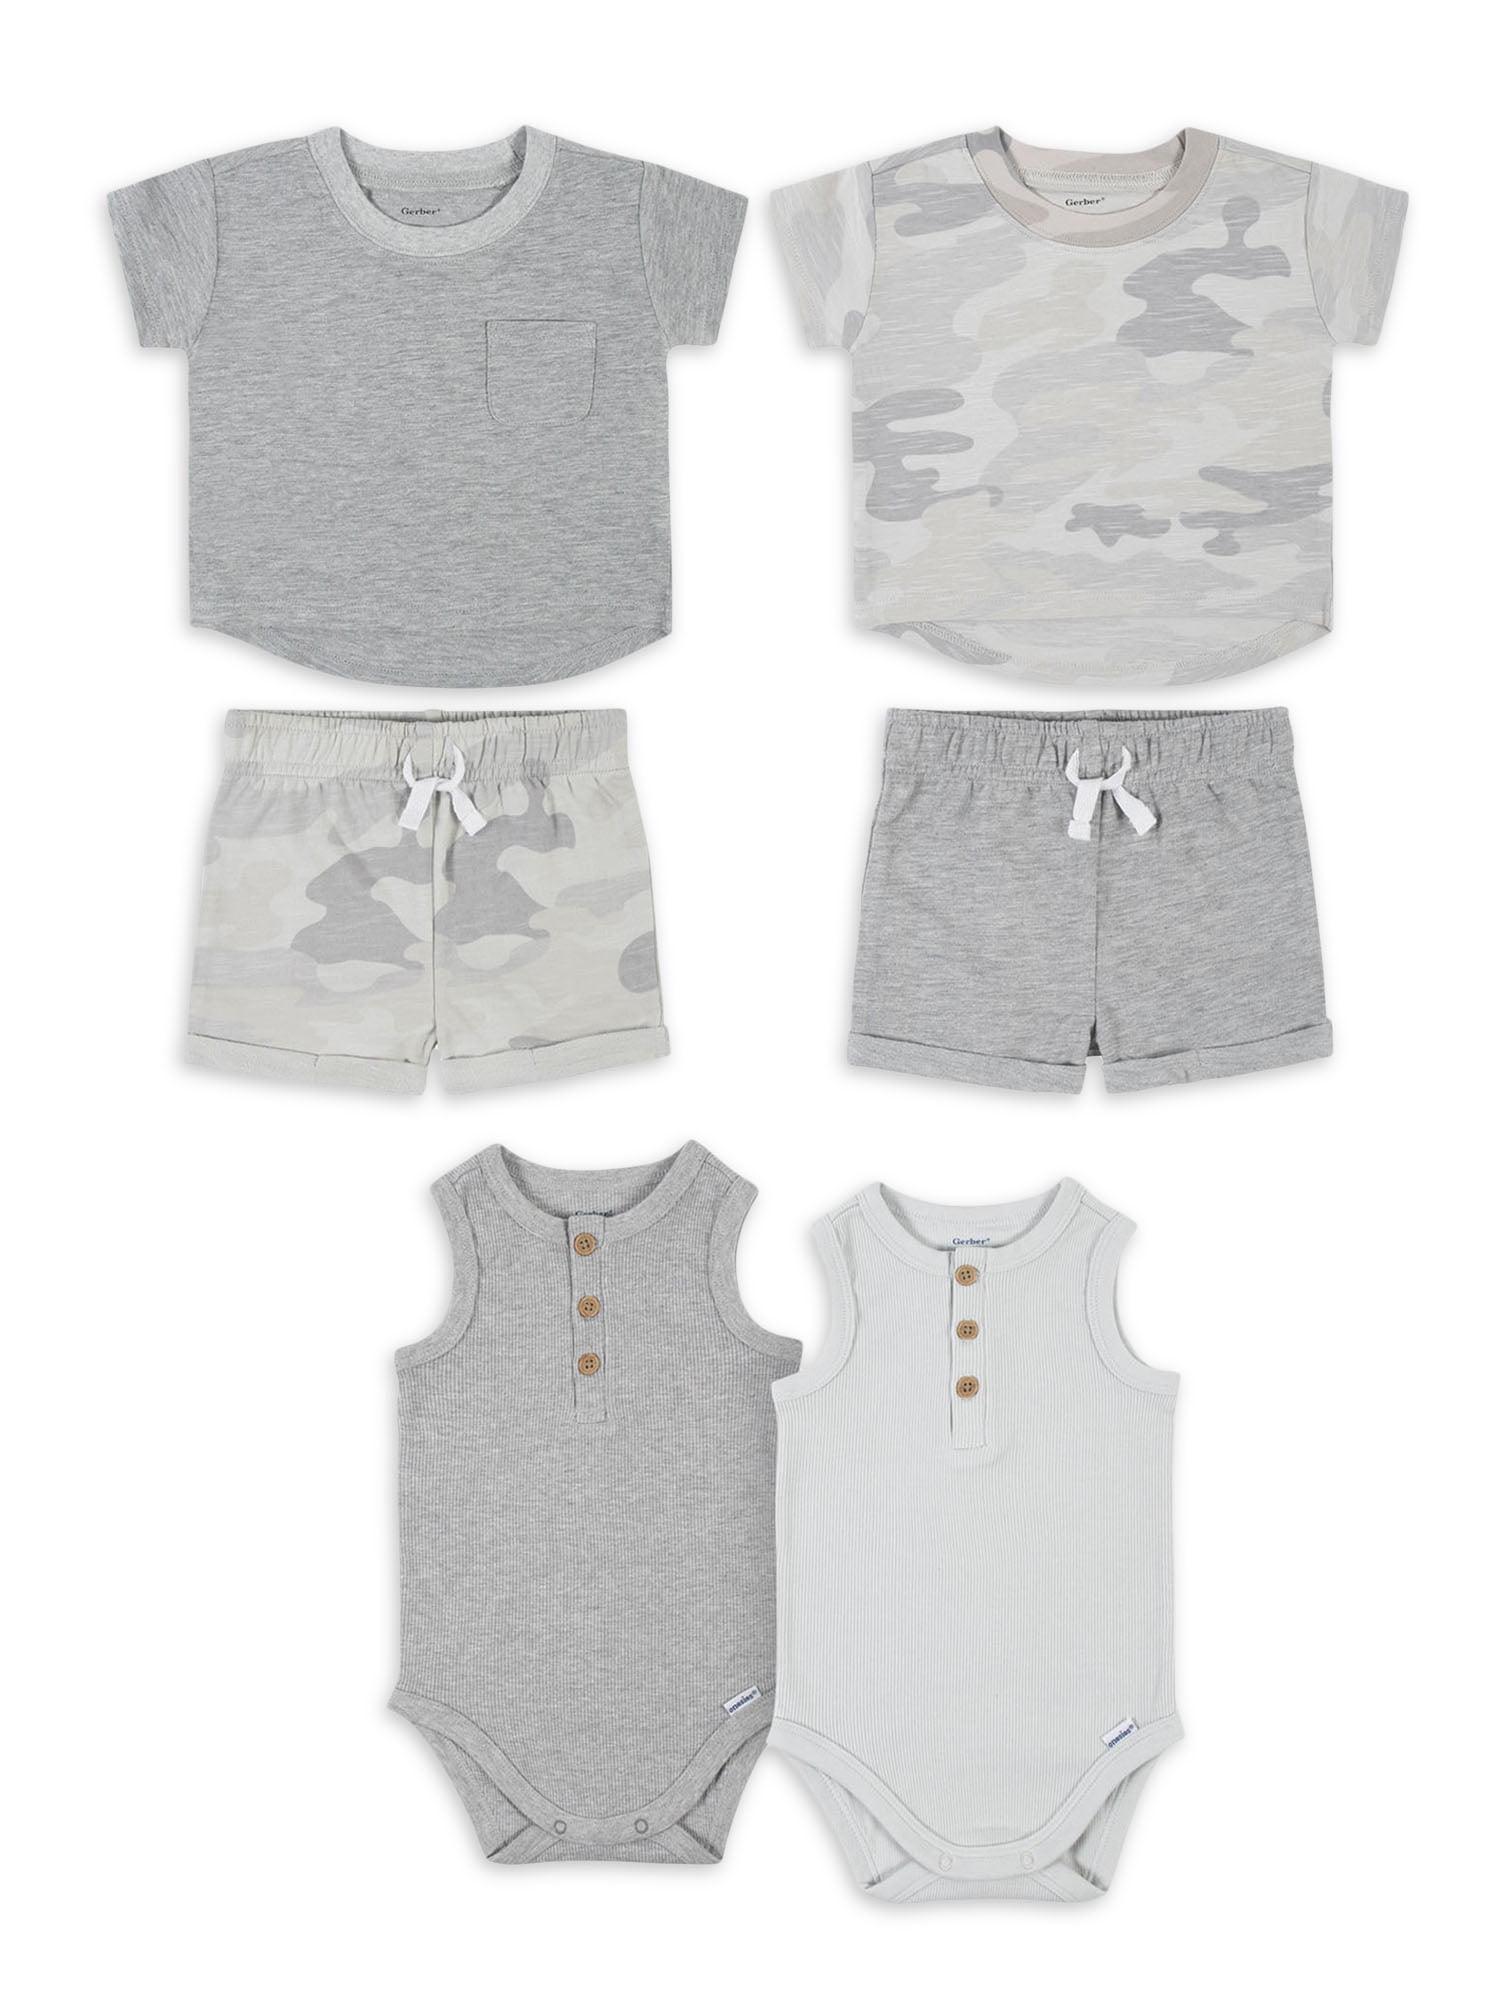 Unisex Girls Short Sleeve Tees 0-24 Months Boys Baby Sleeveless Tank Tops 100% Cotton Shirts 